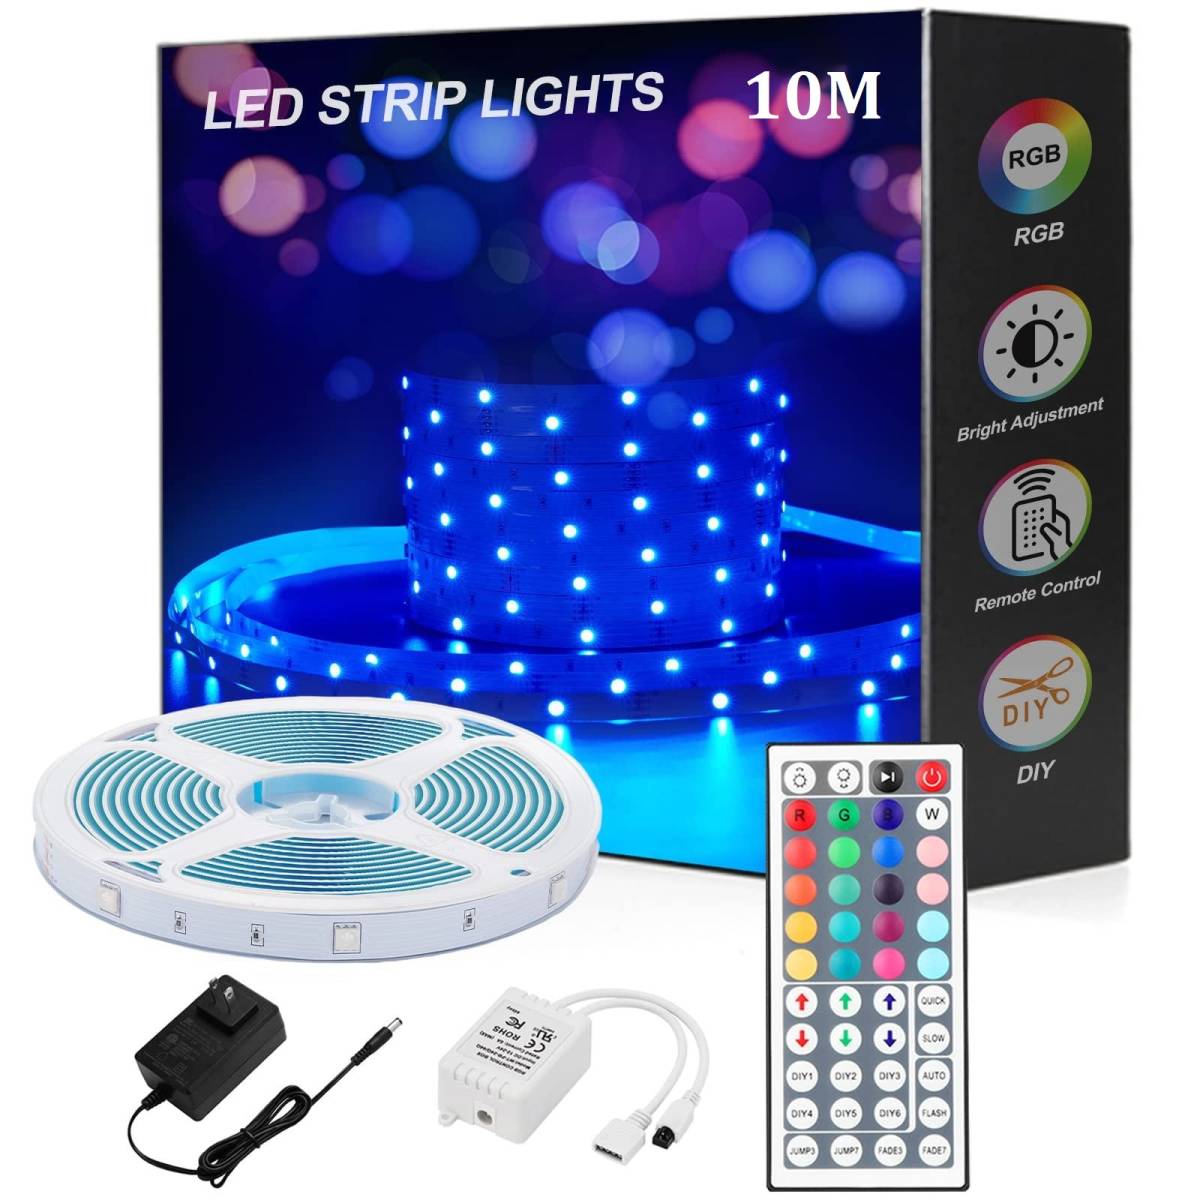 【WQHV】Lightight LEDテープライト 10M RGB 両面テープ 44キーリモコン DC12V 高輝度 間接照明 切断可能 SMD 5050 DIY可能_画像1